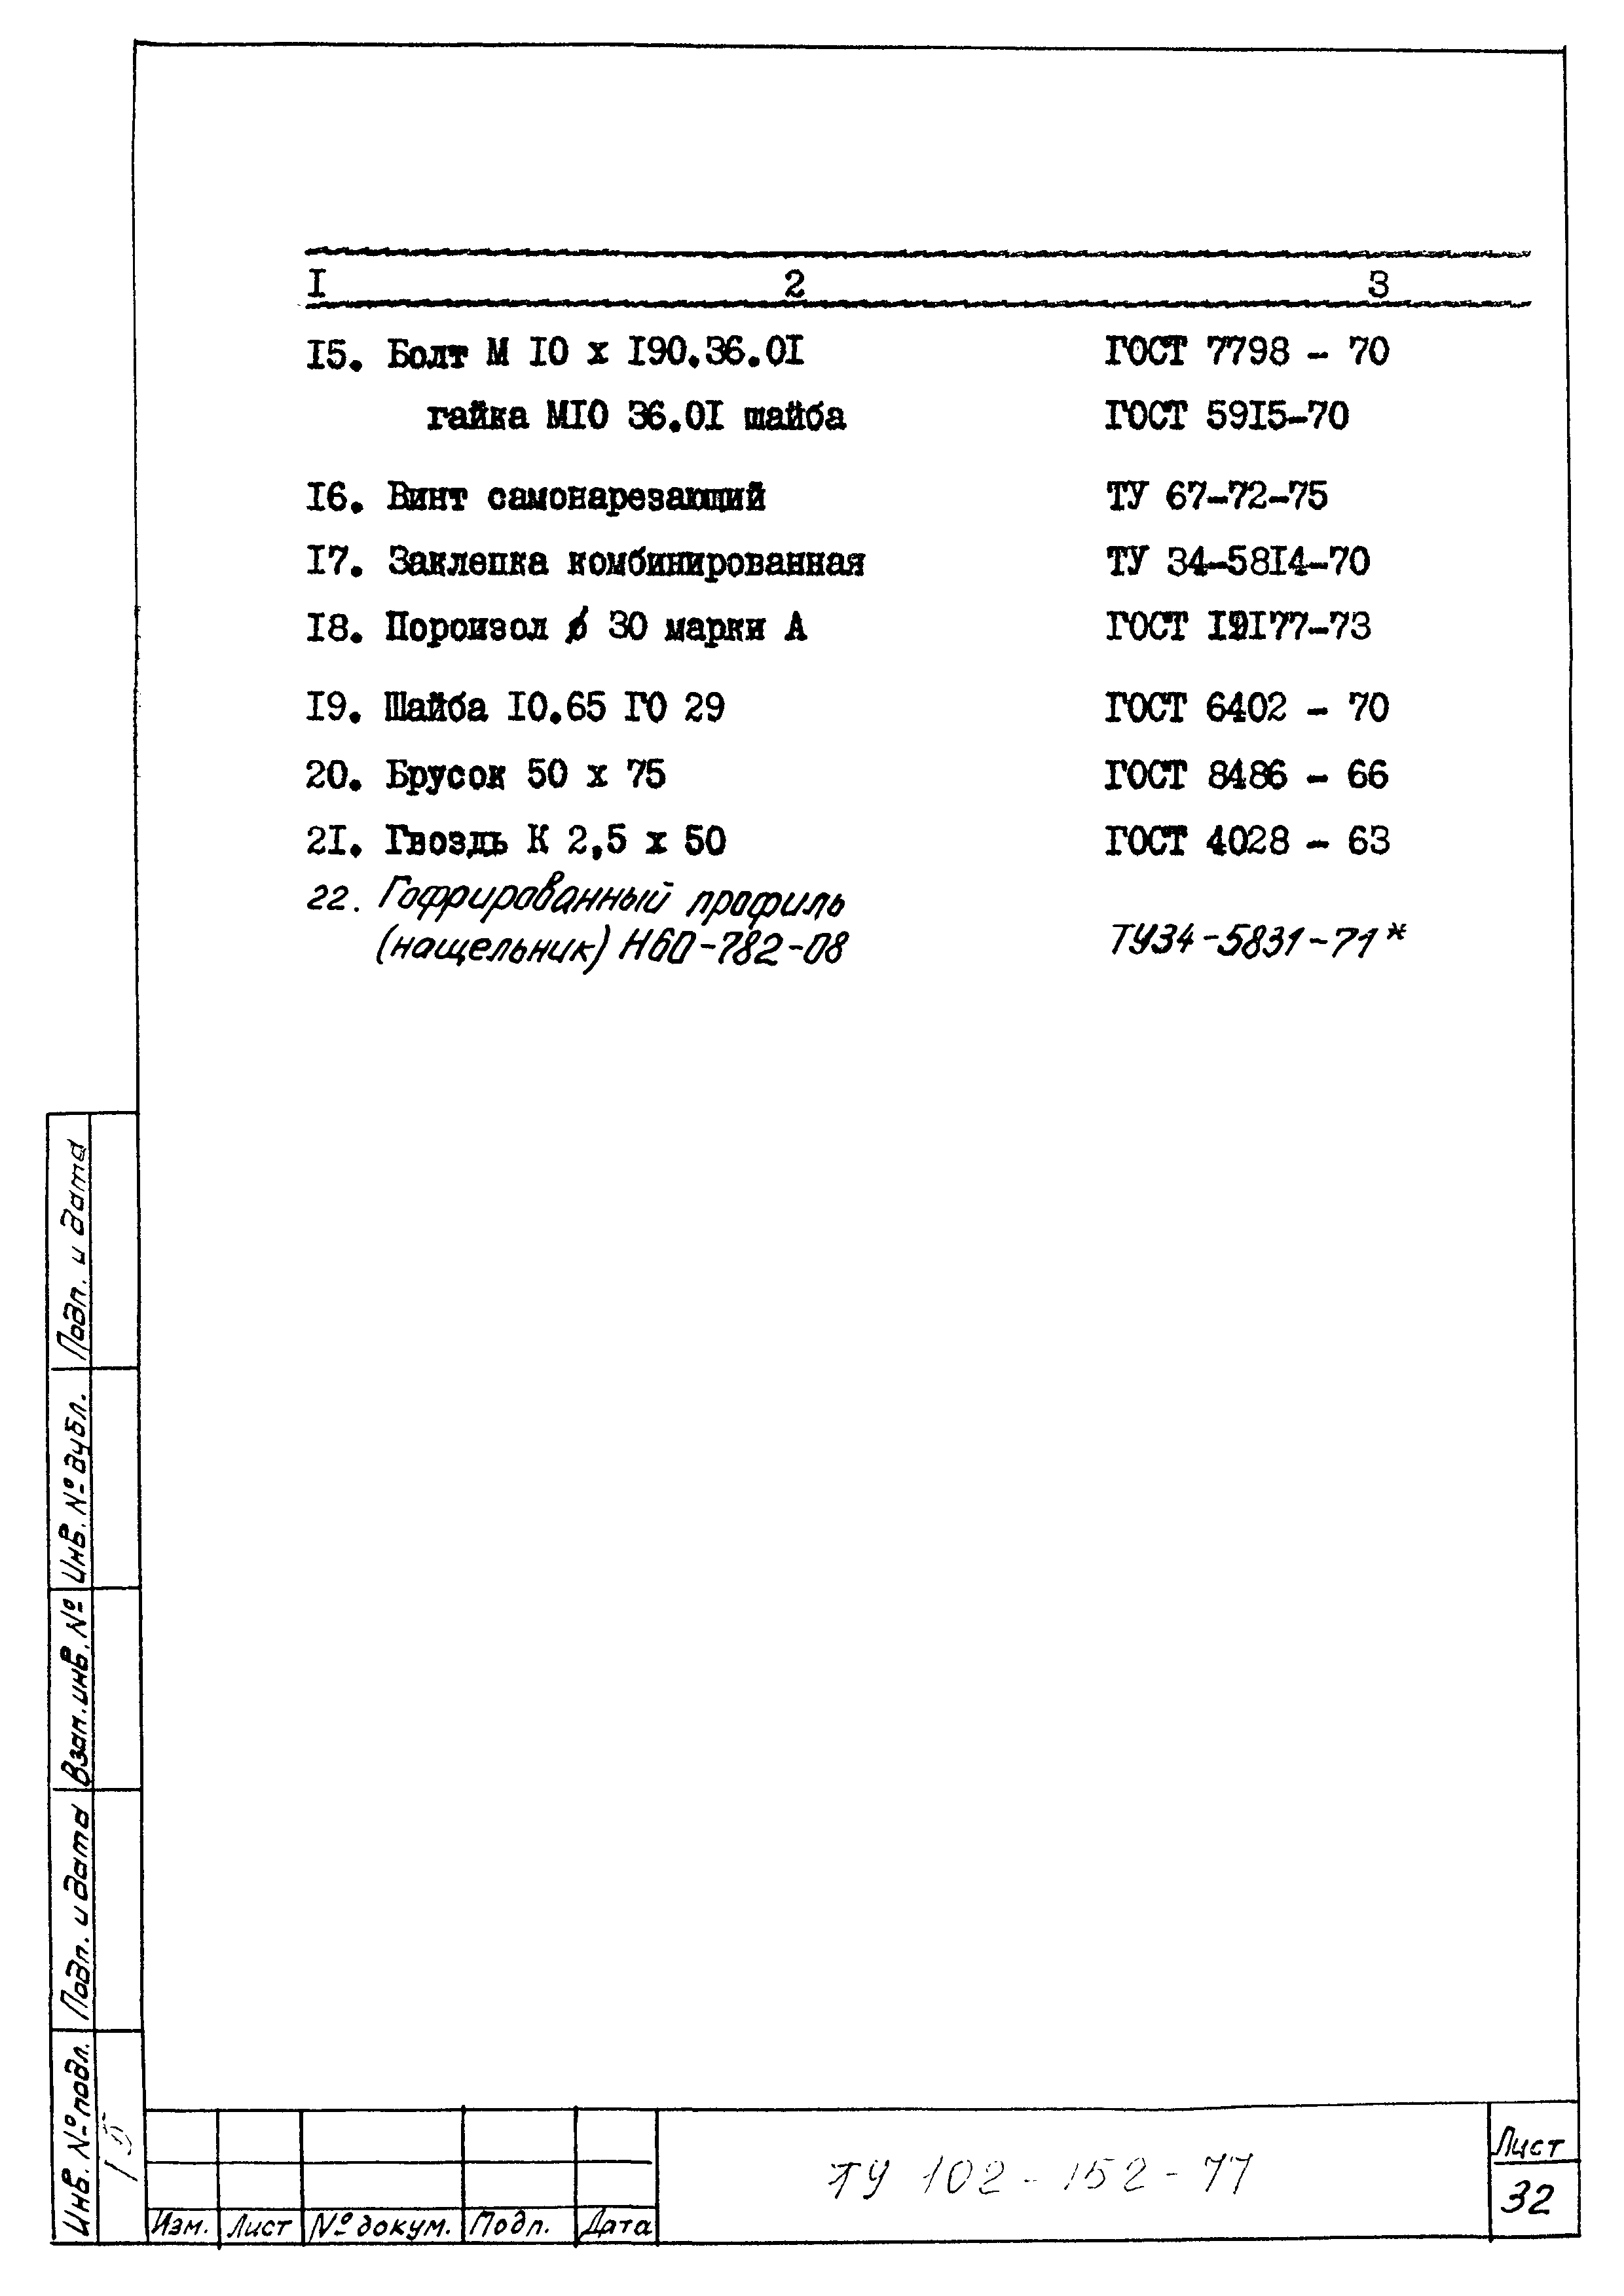 ТУ 102-152-77